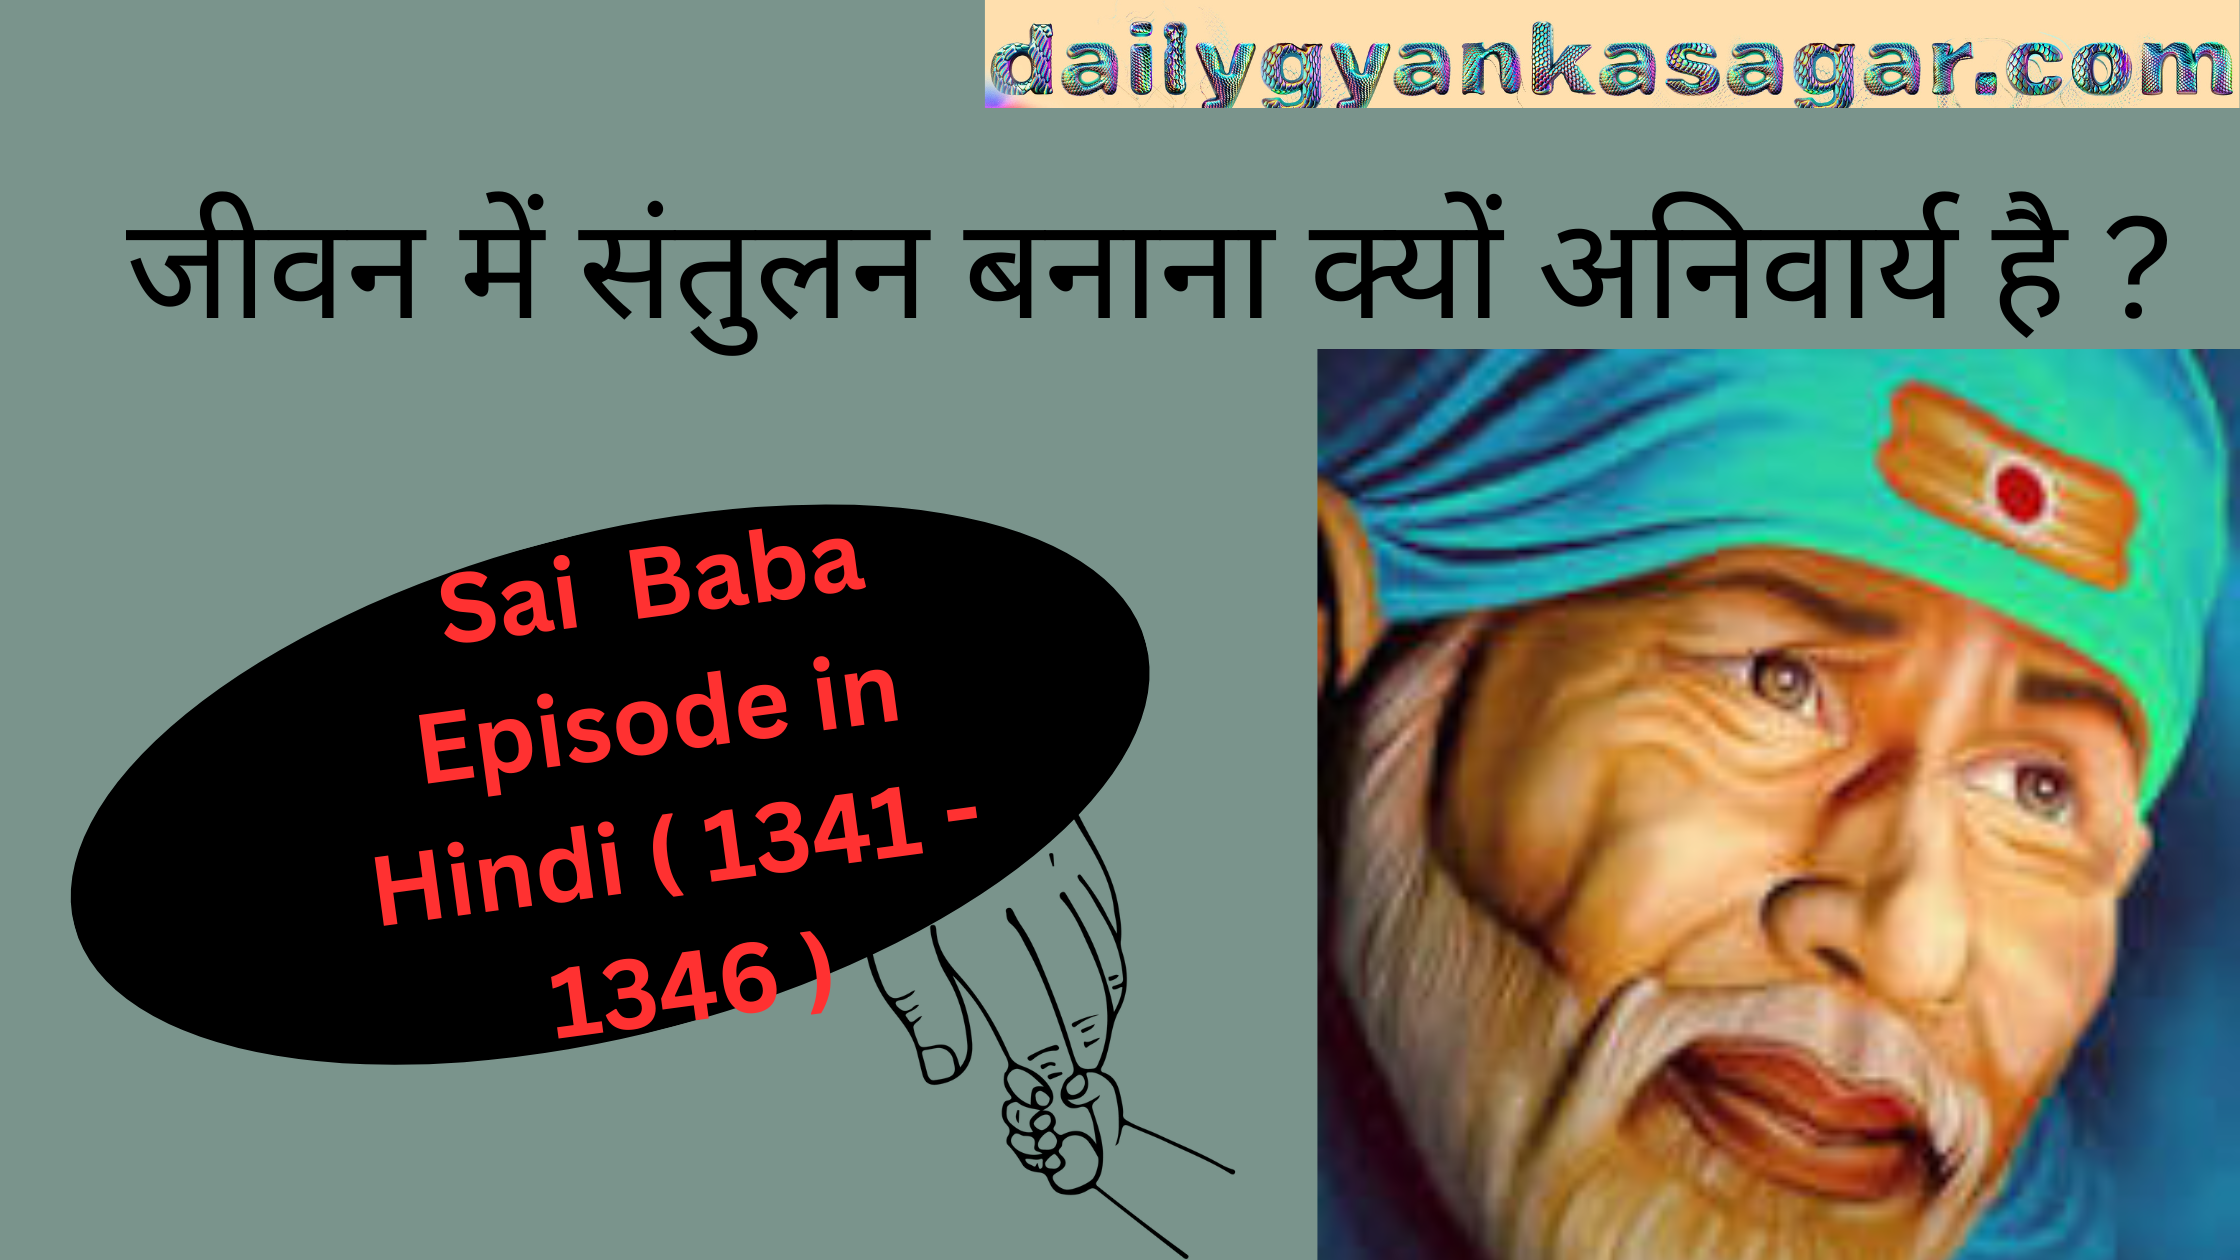 Sai Baba Episode in Hindi ( 1341 - 1346 )